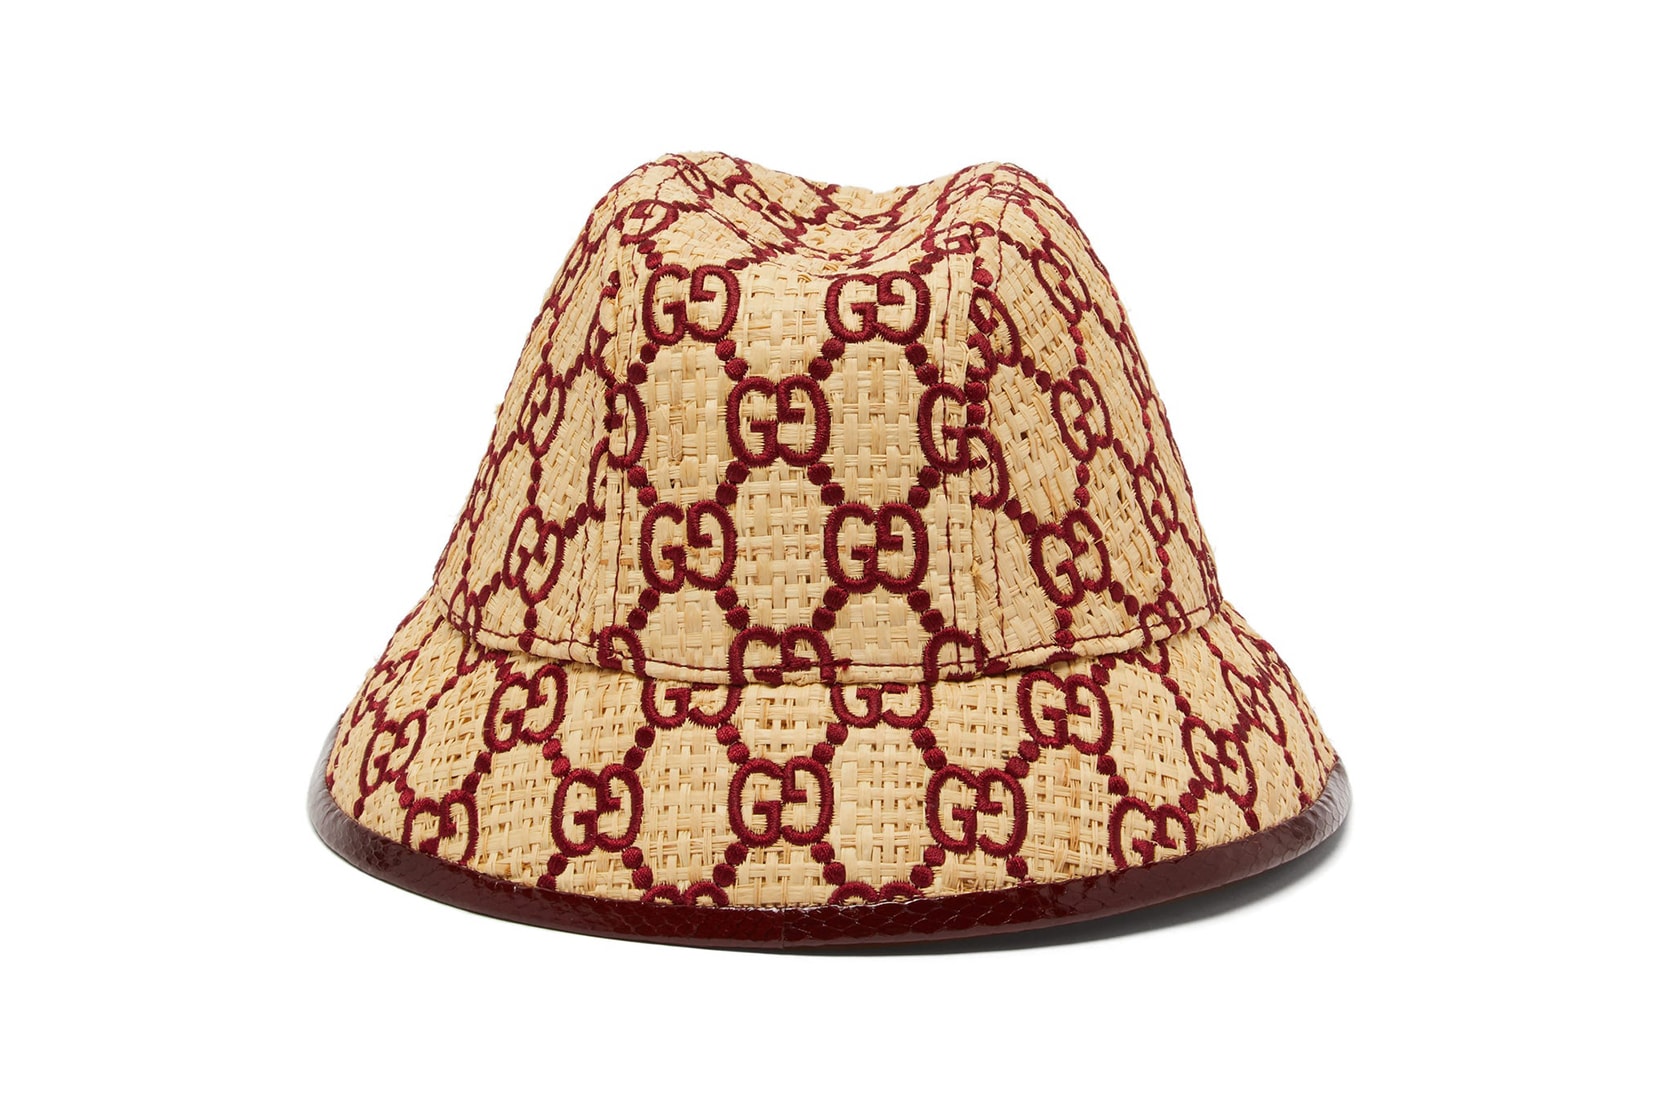 gucci gg logo oversized bucket hat fedora snakeskin print raffia palm straw woven embroidery summer beach sun protection